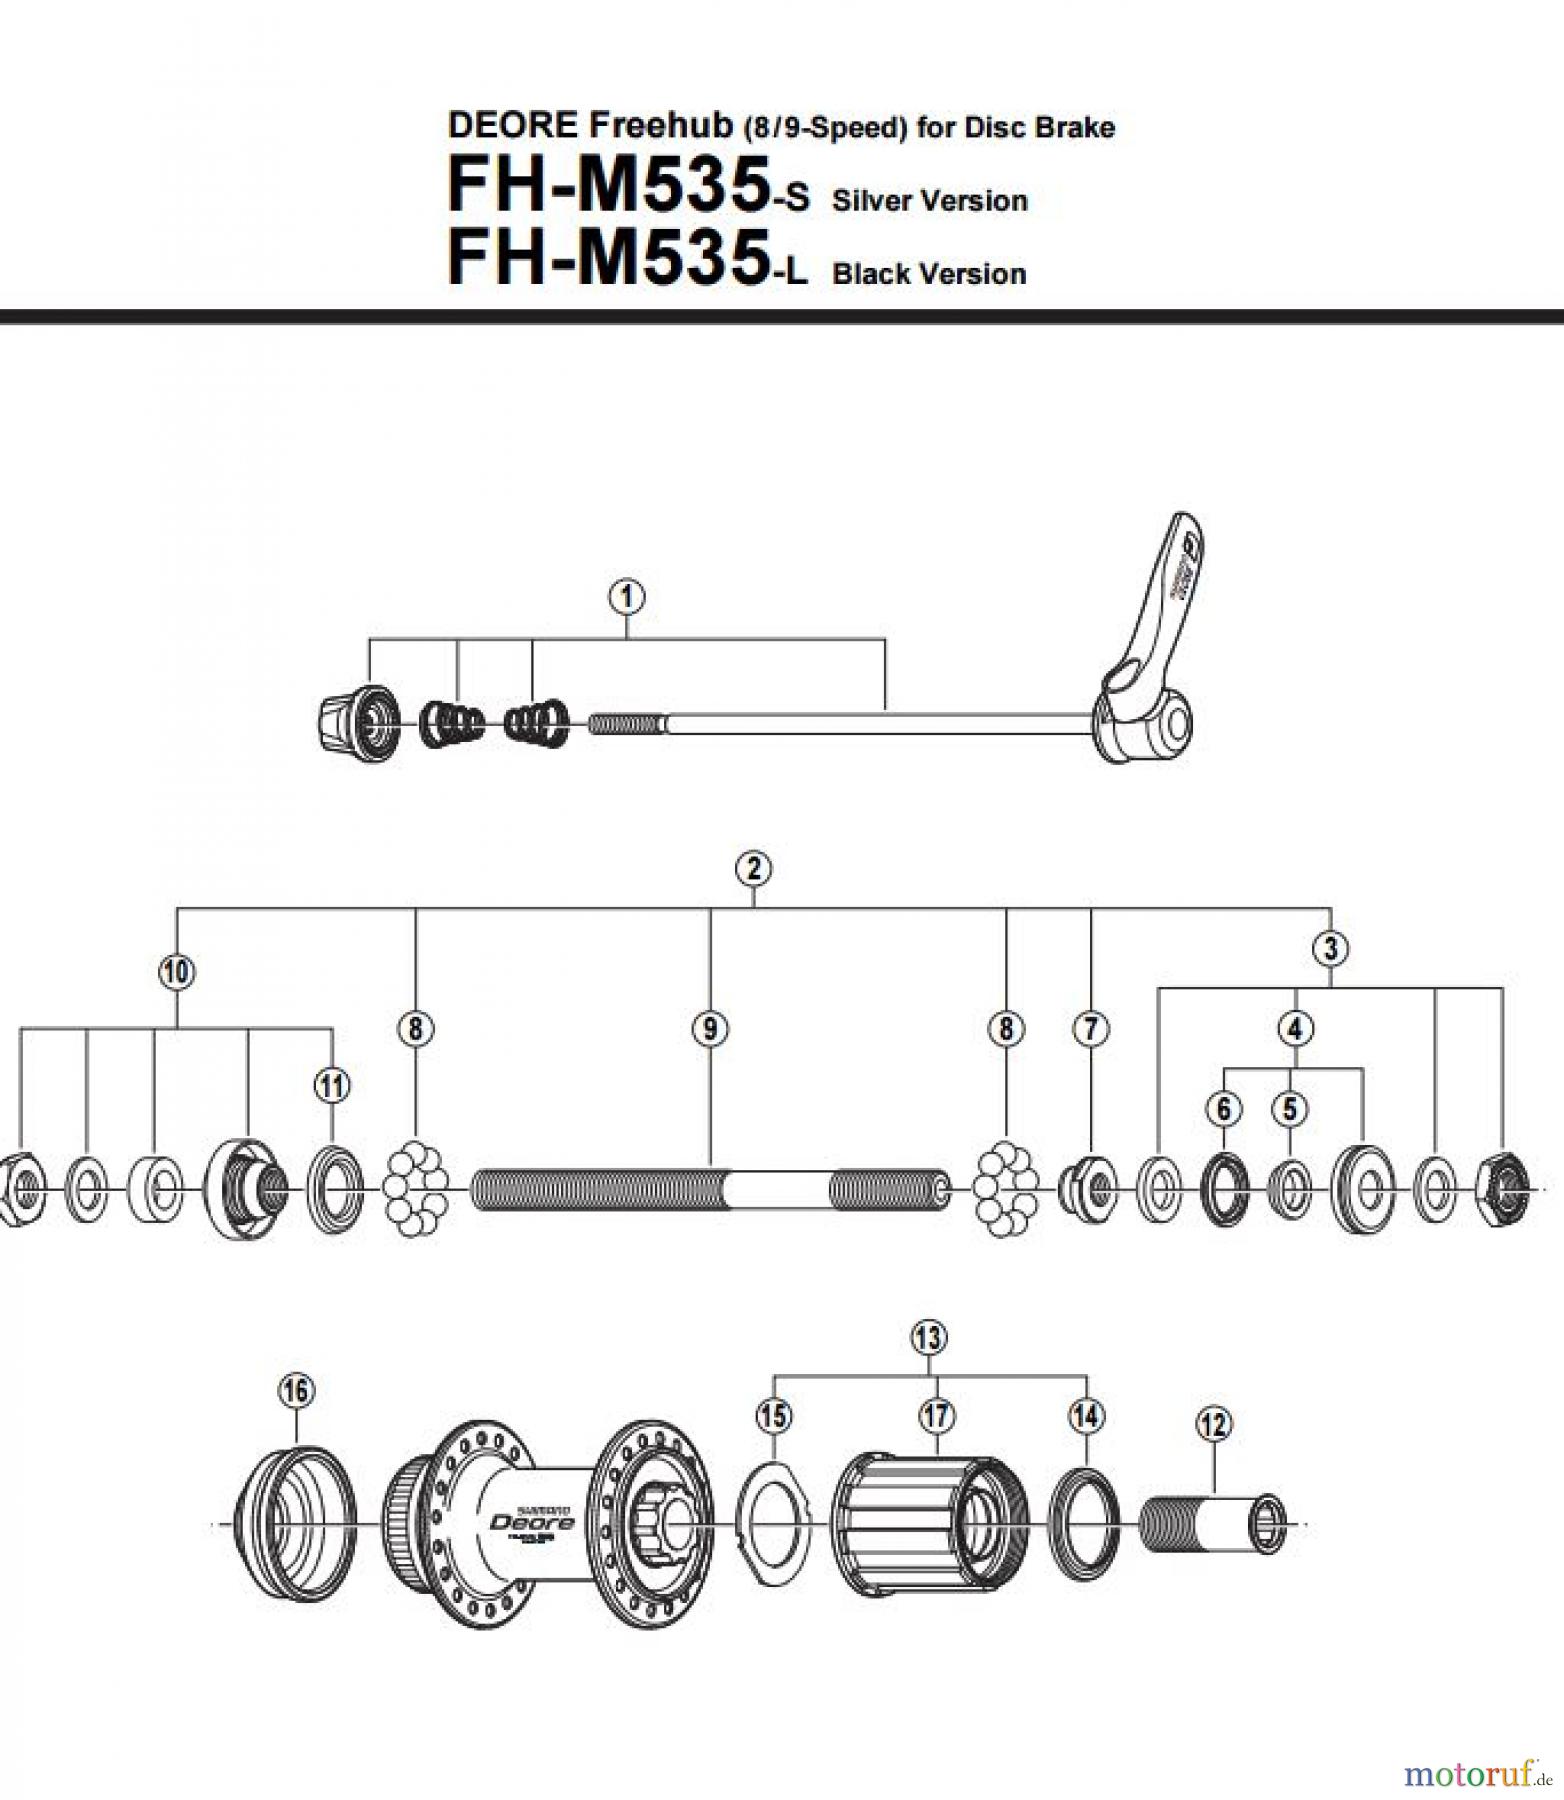  Shimano FH Free Hub - Freilaufnabe FH-M535 -2462C DEORE Freehub (8/9-Speed) for Disc Brake